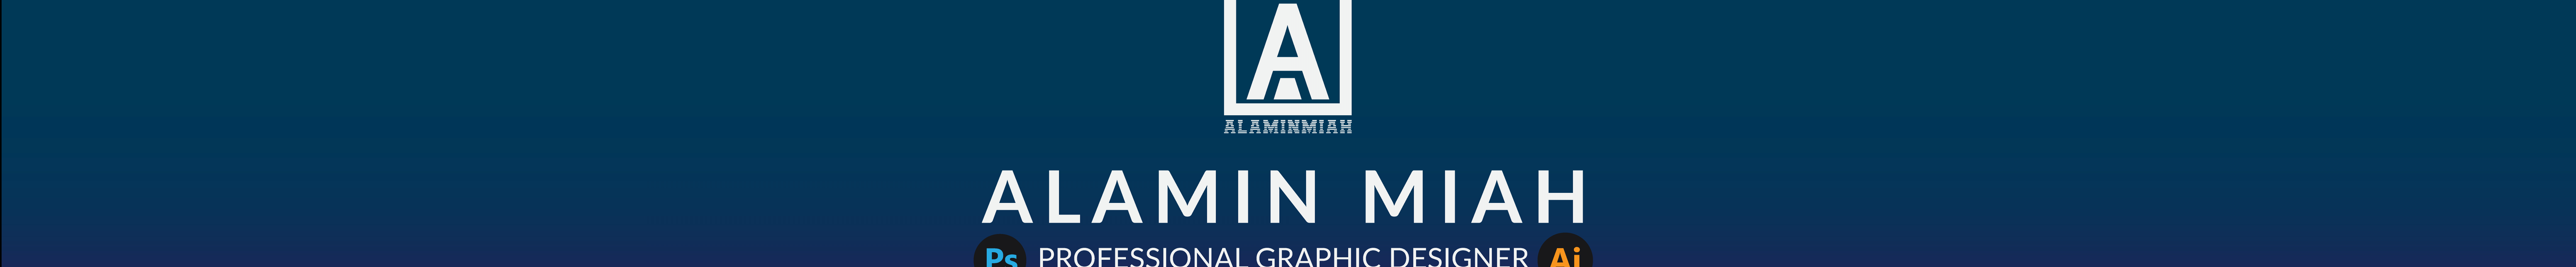 Alamin Miah's profile banner